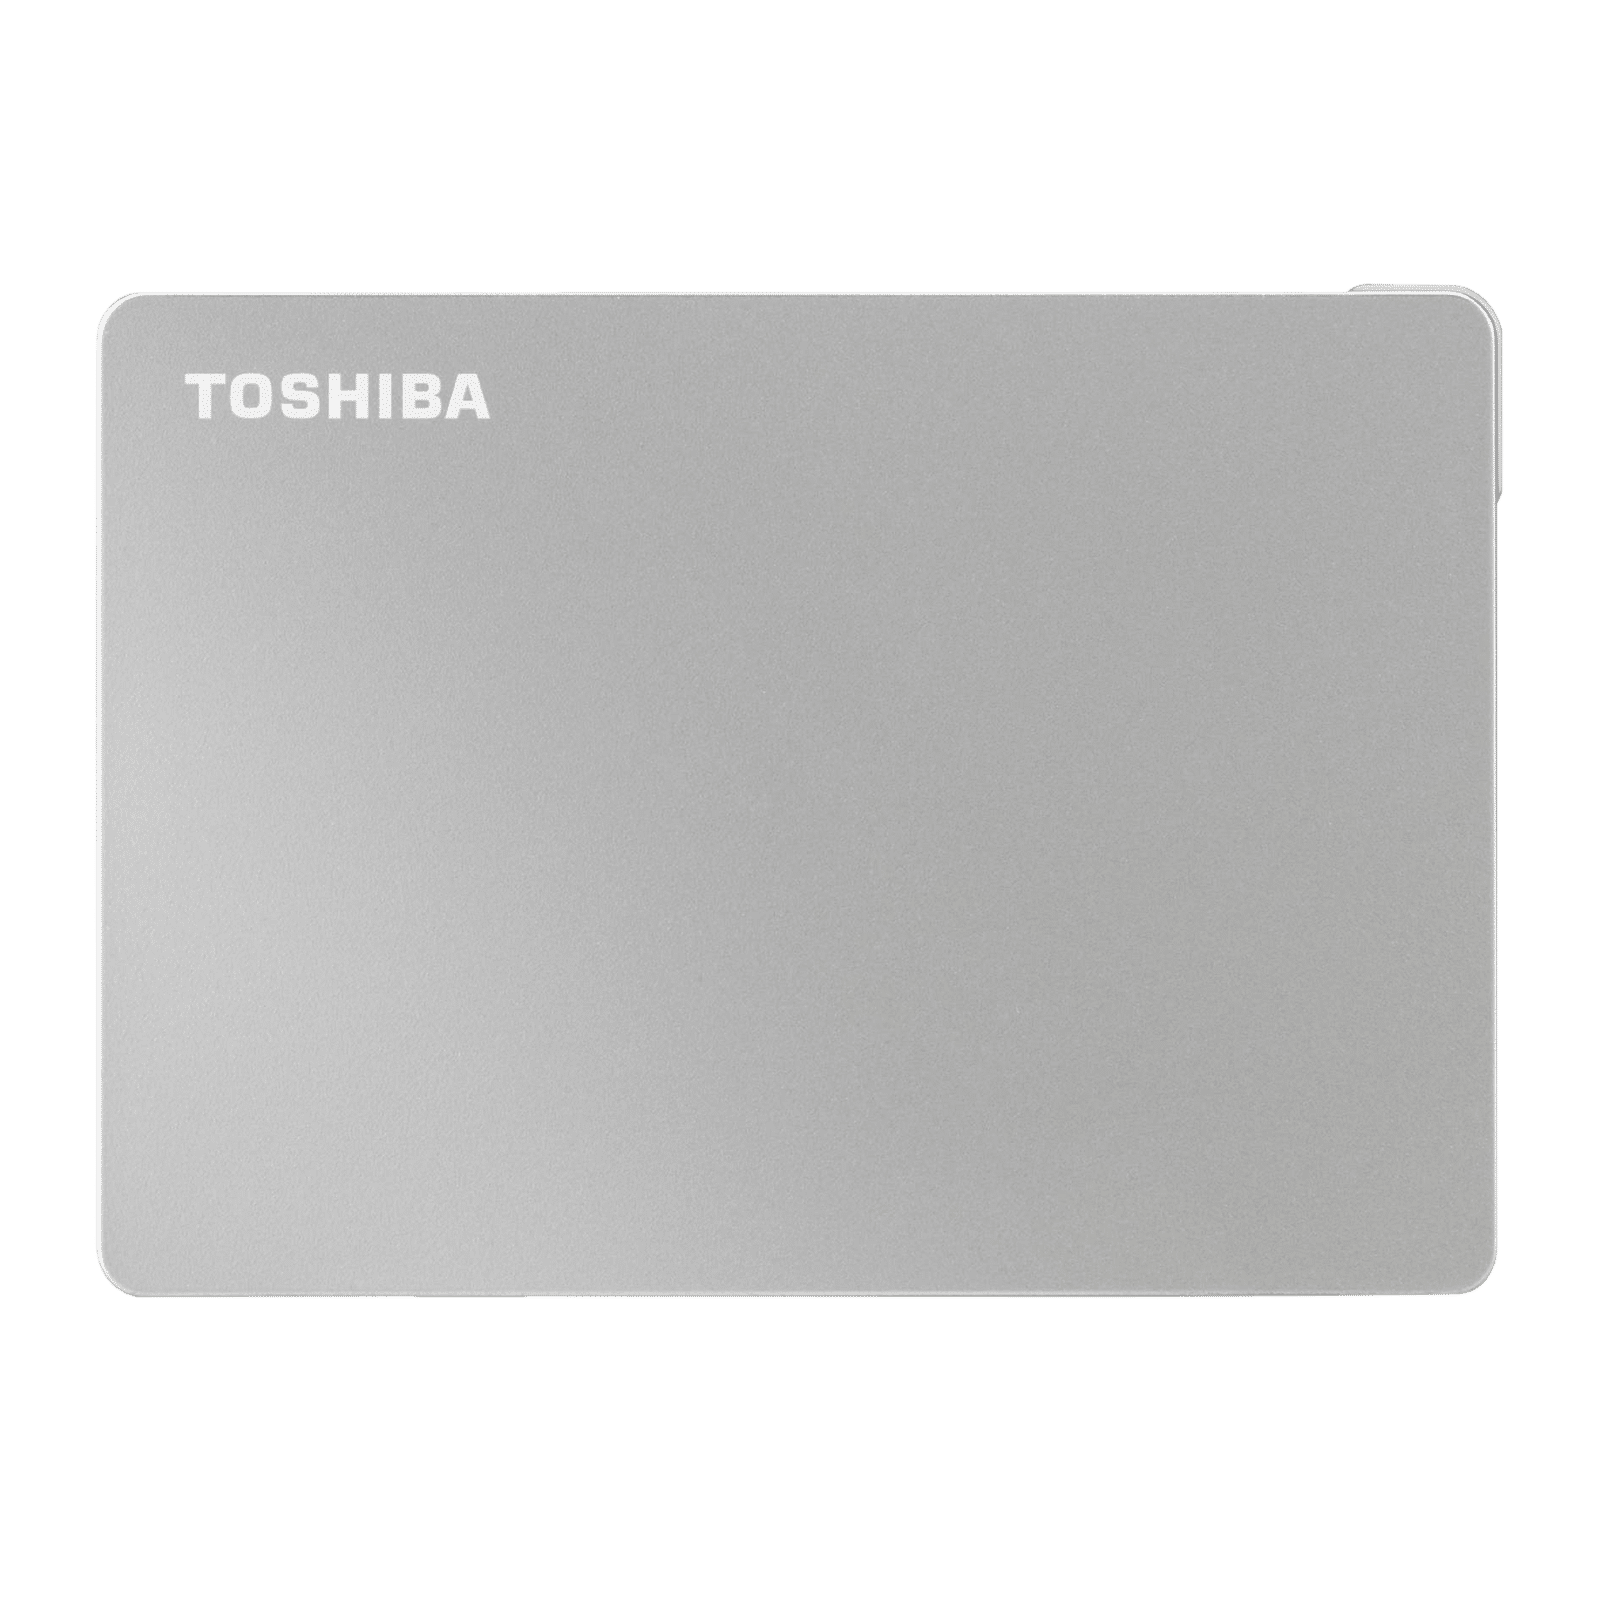 Toshiba Canvio Flex portable HDD review